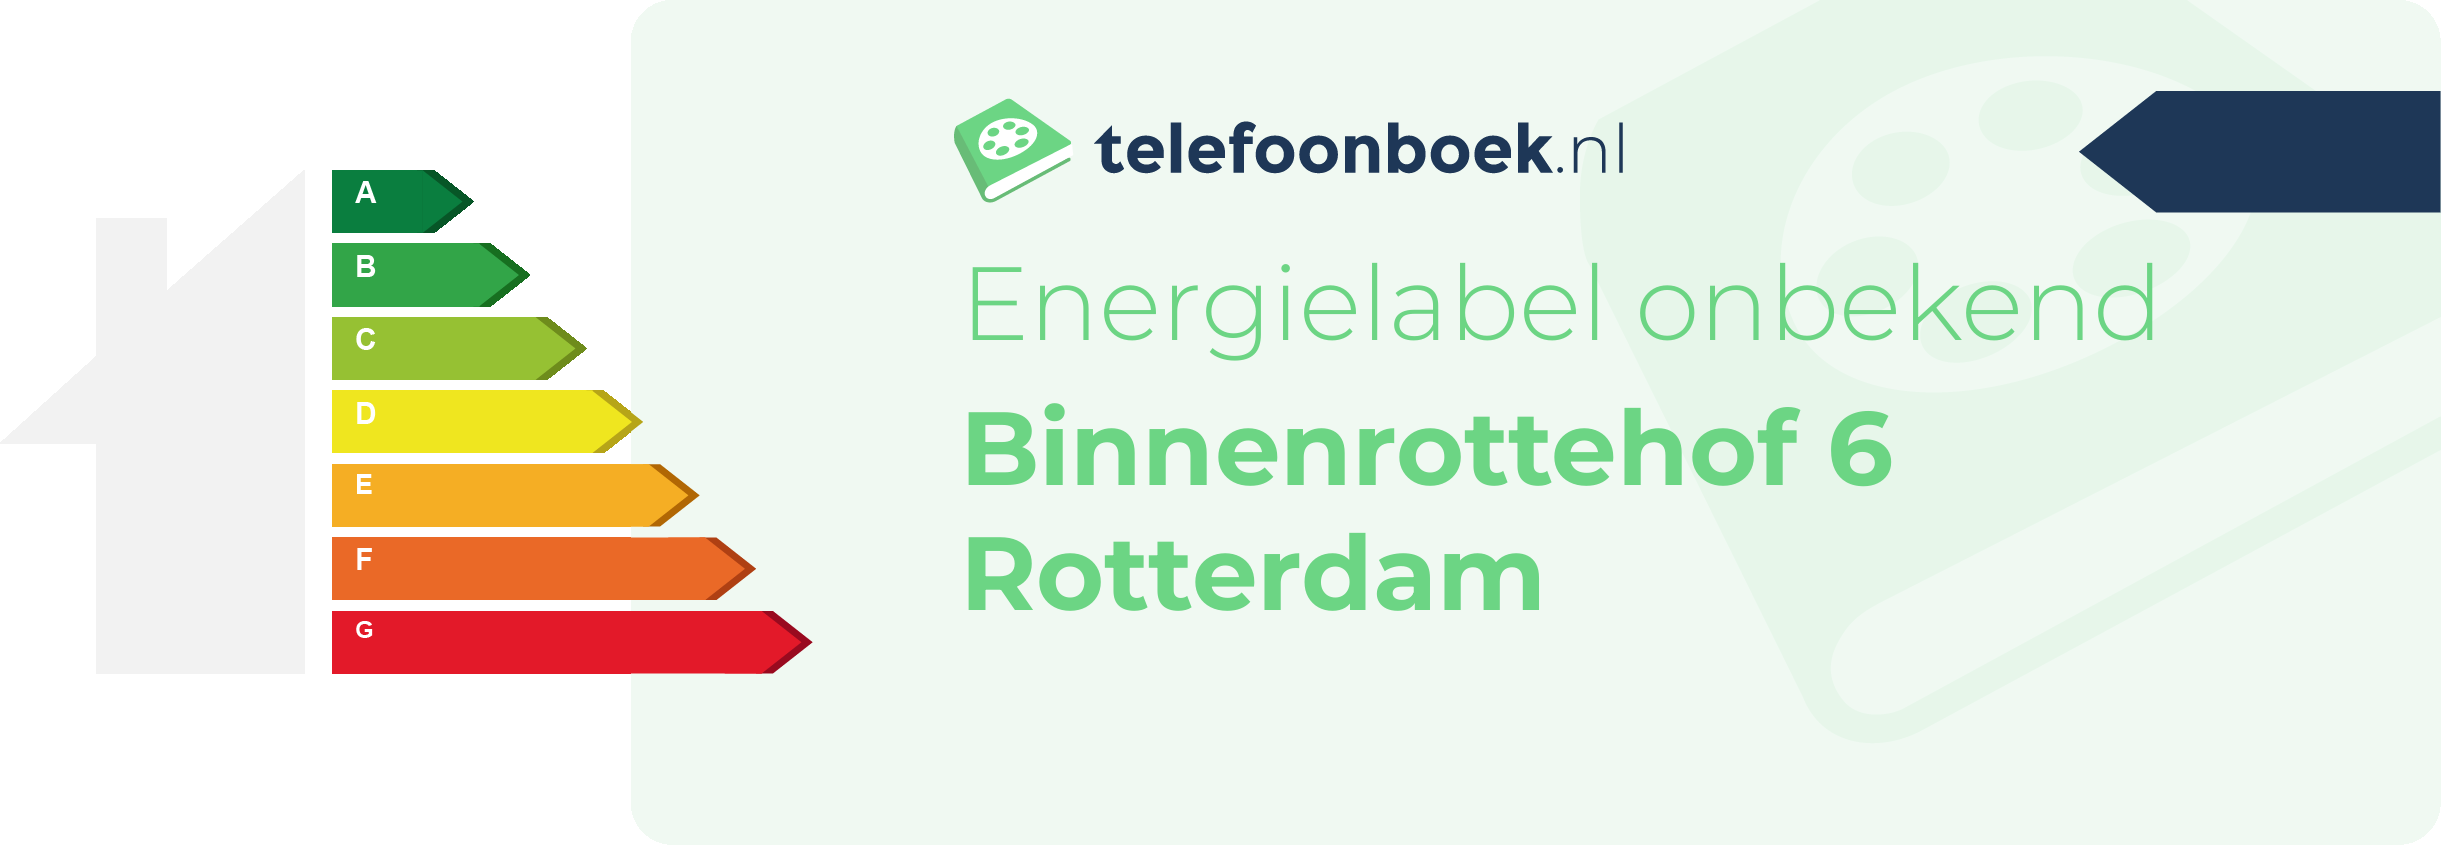 Energielabel Binnenrottehof 6 Rotterdam